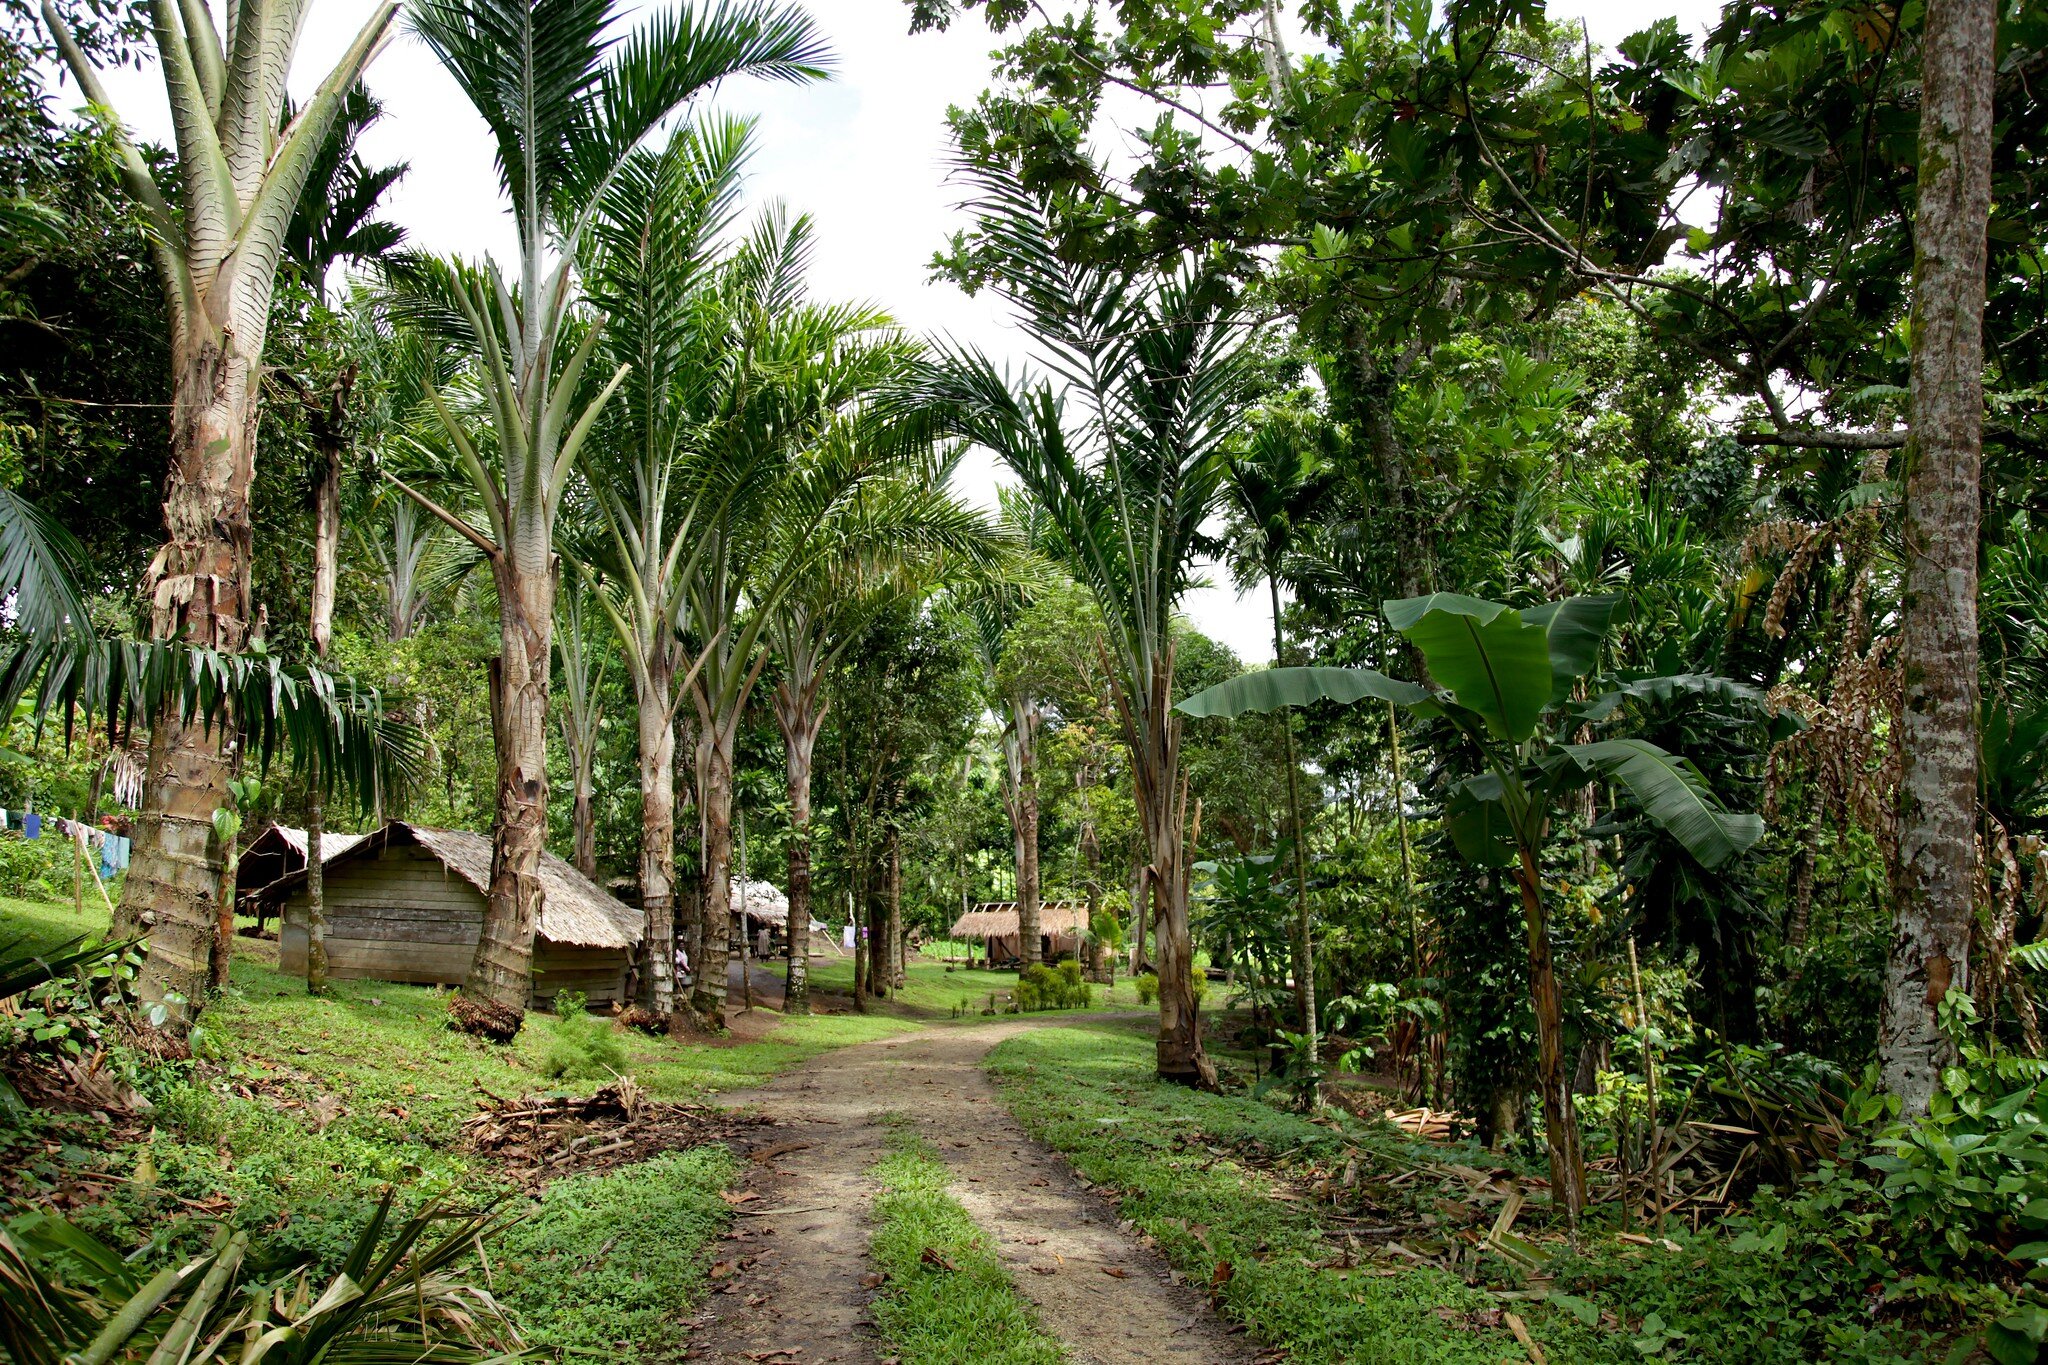 PICTURED: Village on Buka Island, Bougainville. Photo credit: Jeremy Weate. CC 3.0